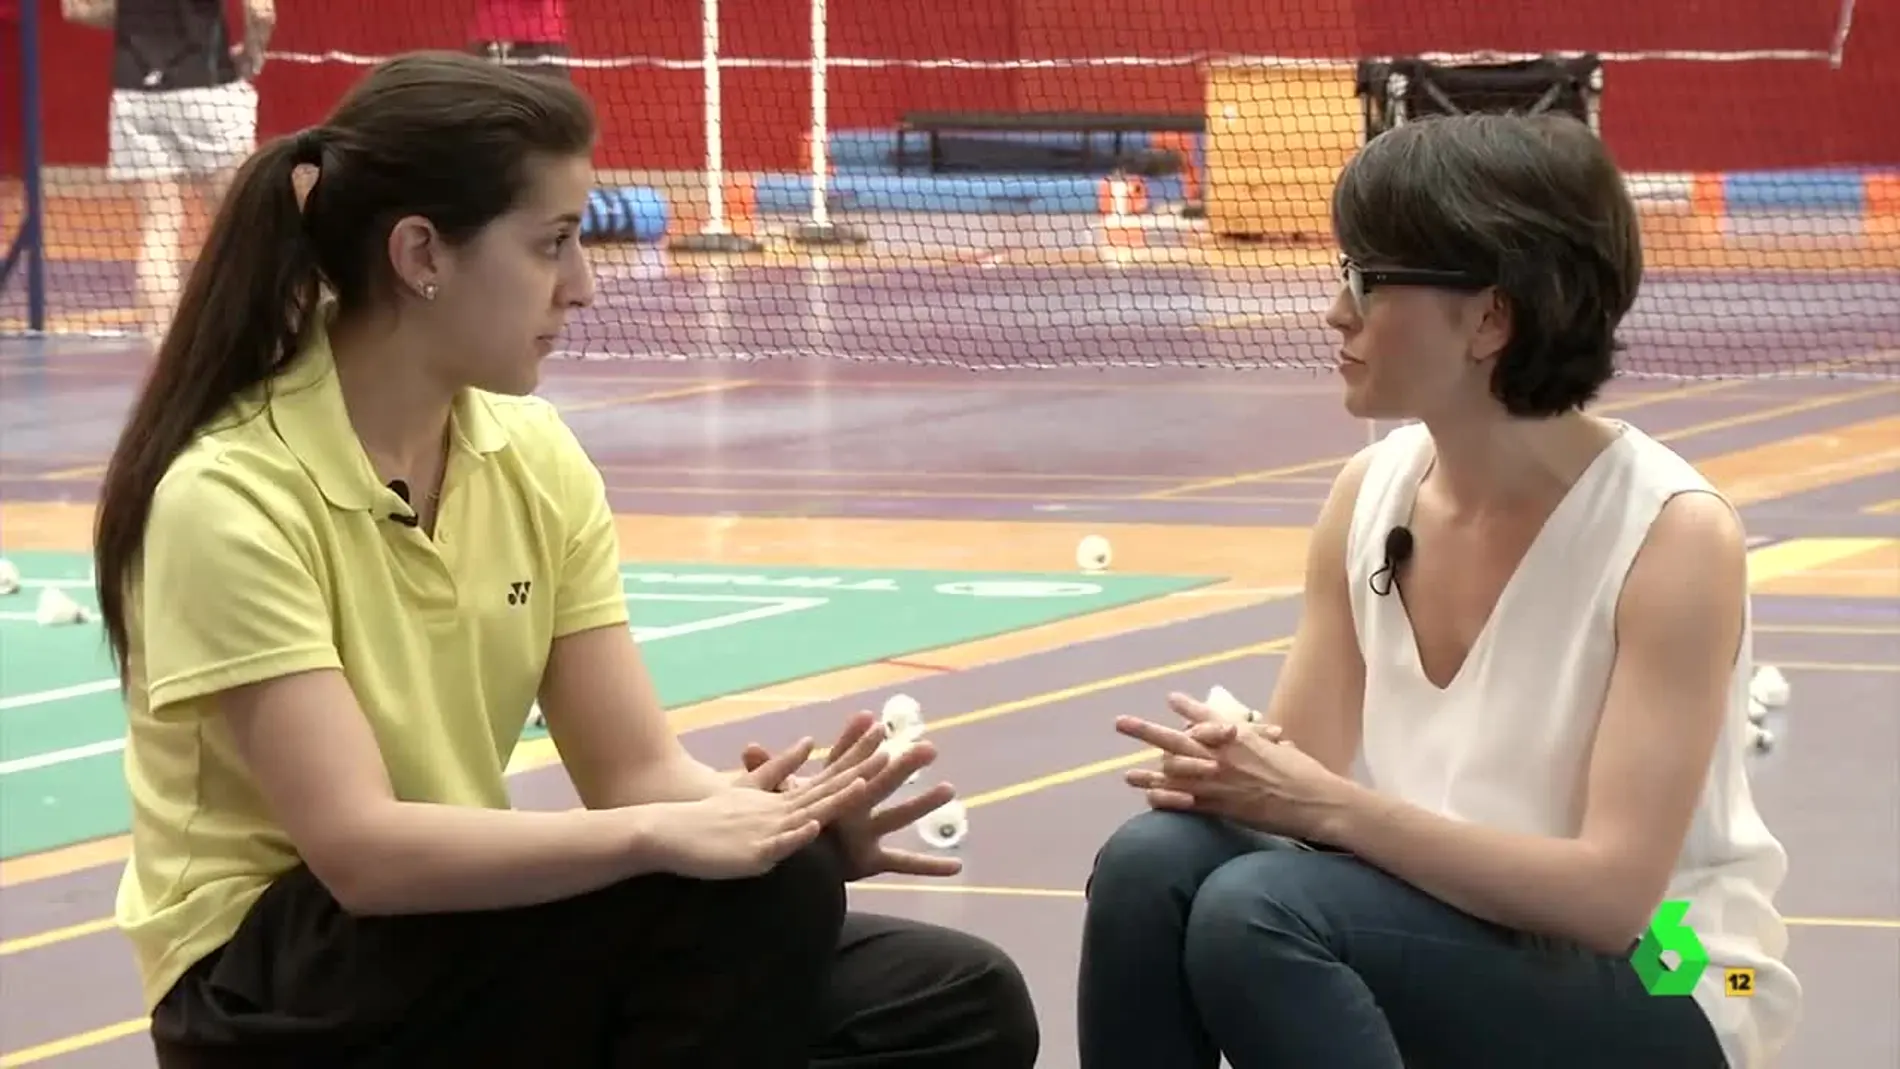 Thais Villas entrevista a la jugadora de bádminton Carolina Marín